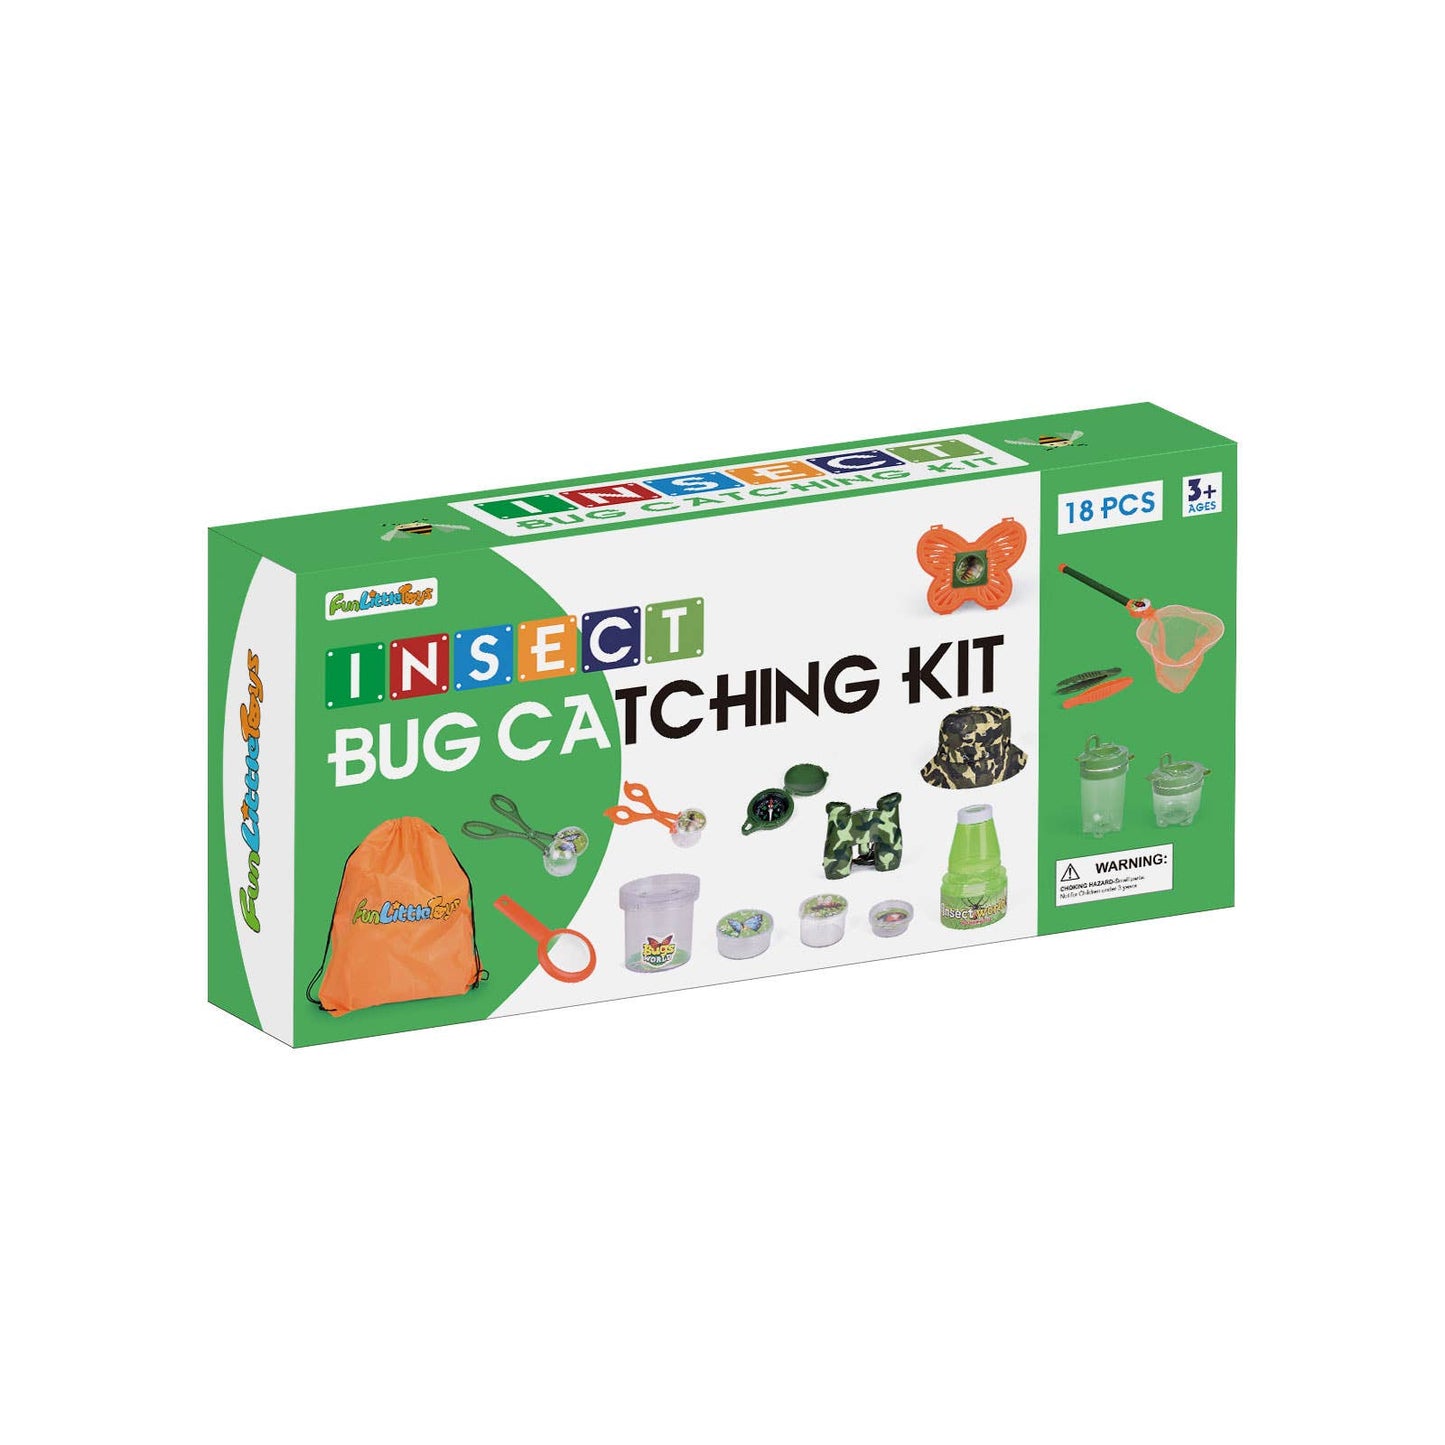 18 PCs Bug Catcher Kits Outdoor Explorer Kit